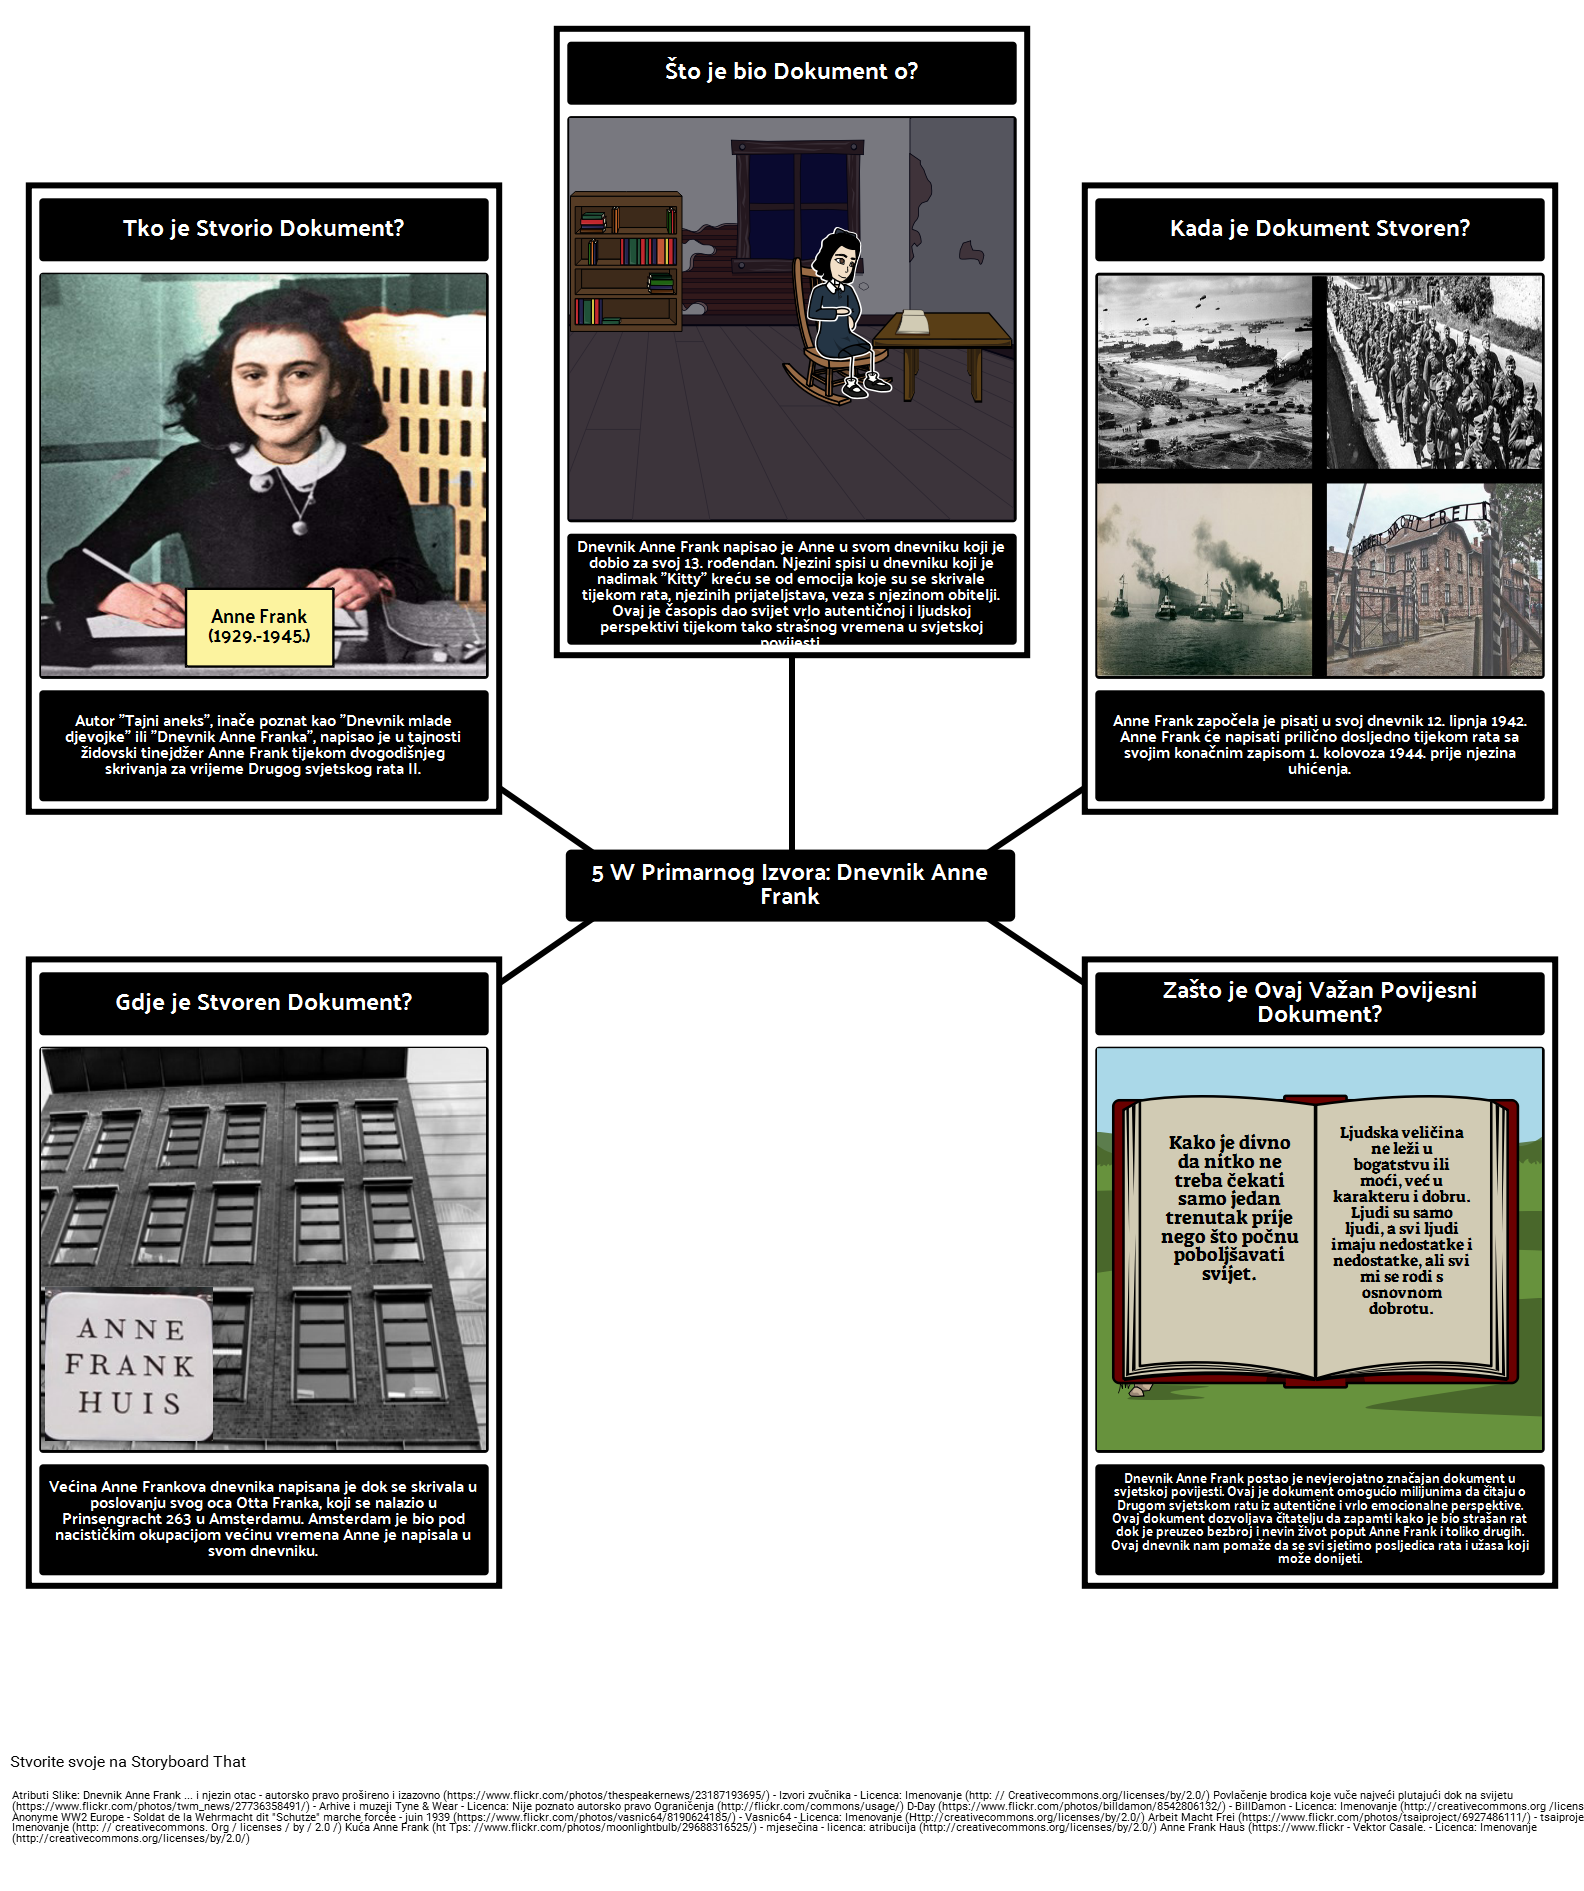 Primarni izvor 5W: Dnevnik Anne Frank